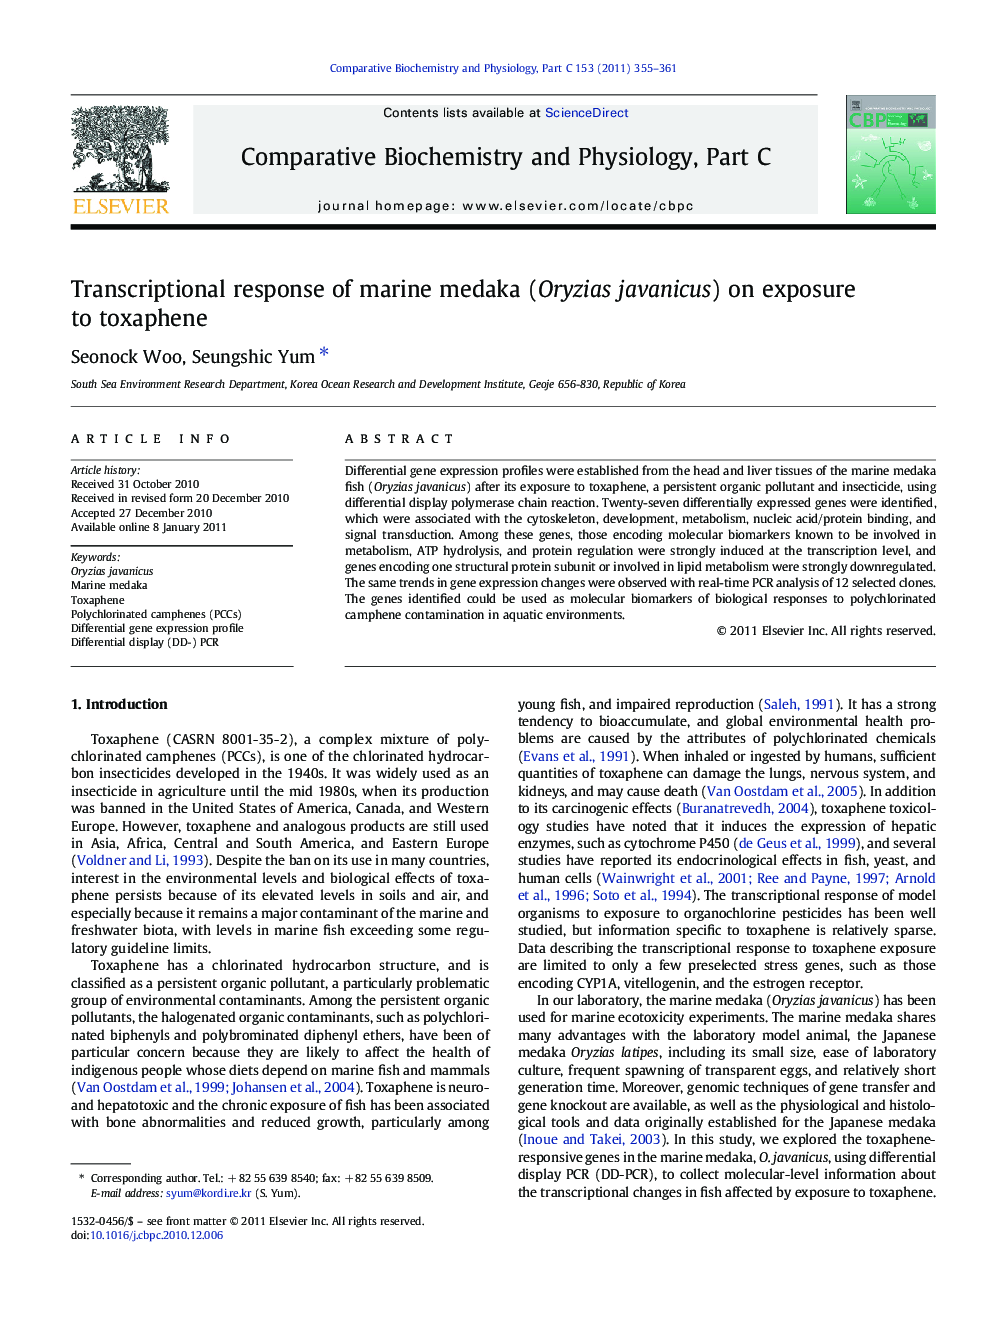 Transcriptional response of marine medaka (Oryzias javanicus) on exposure to toxaphene